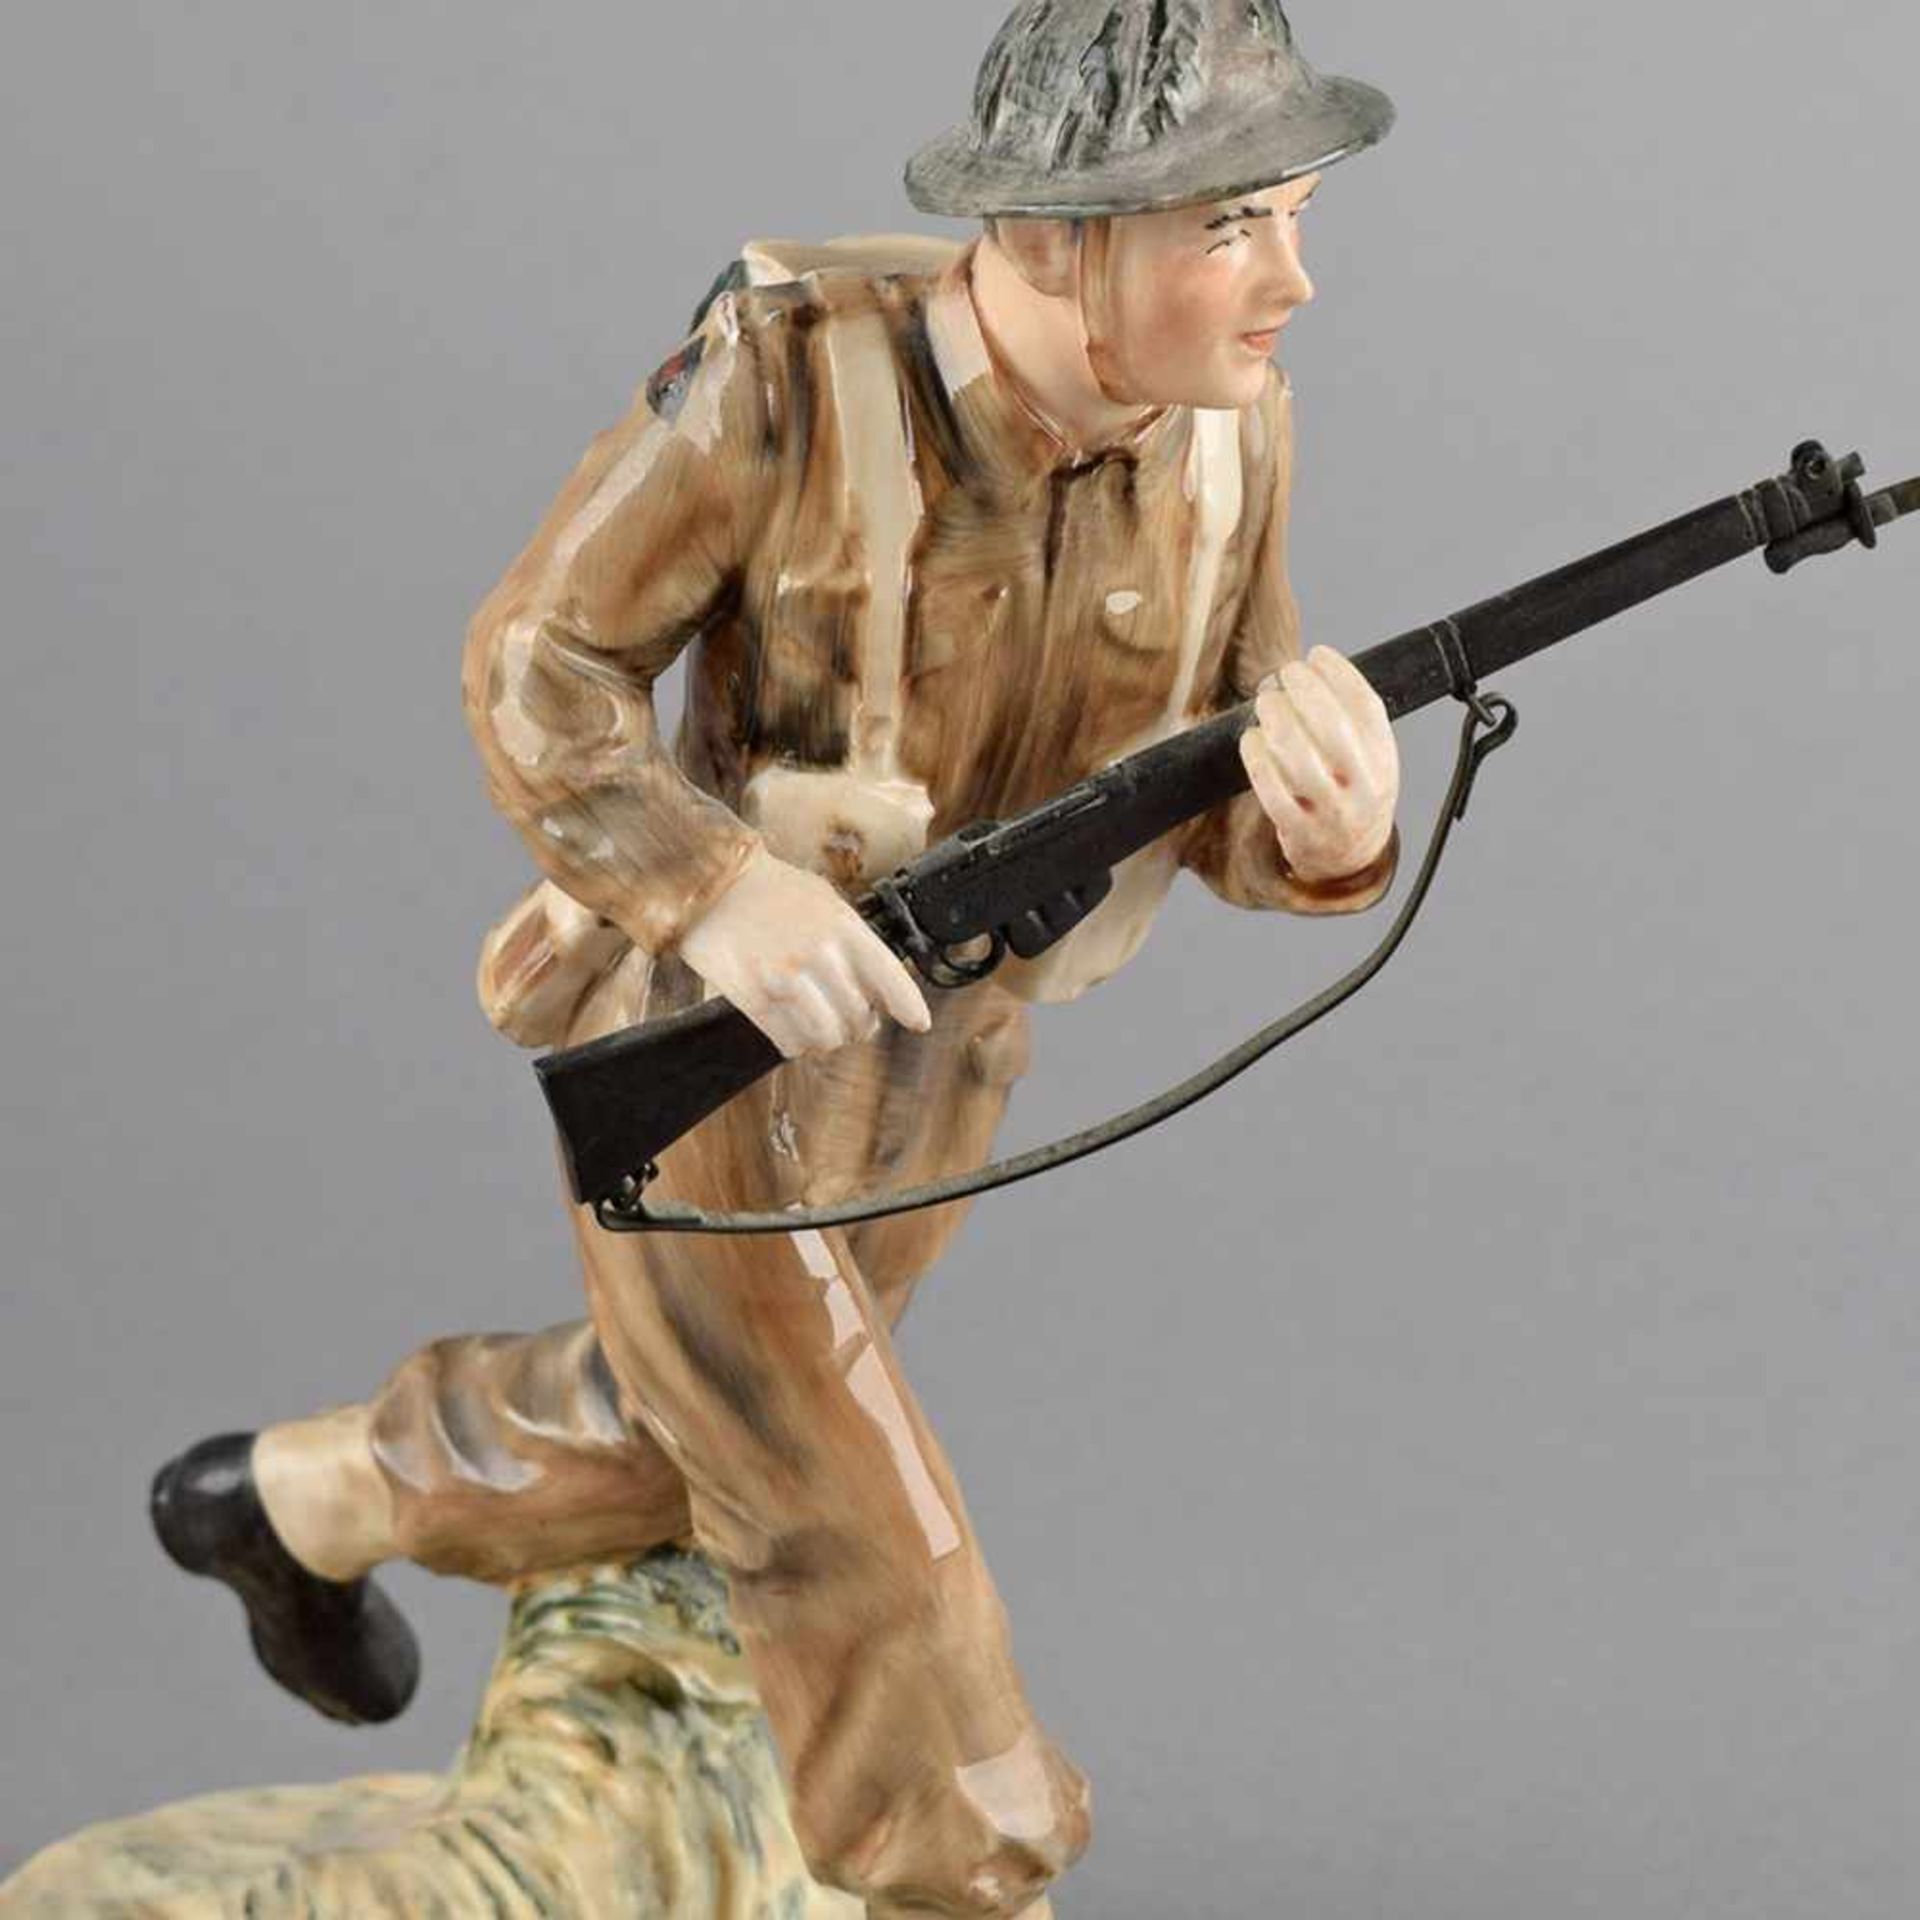 Zierfigur Soldat Hersteller: Coalport, England, Modell John Bromley, "Soldier" aus der Serie "For